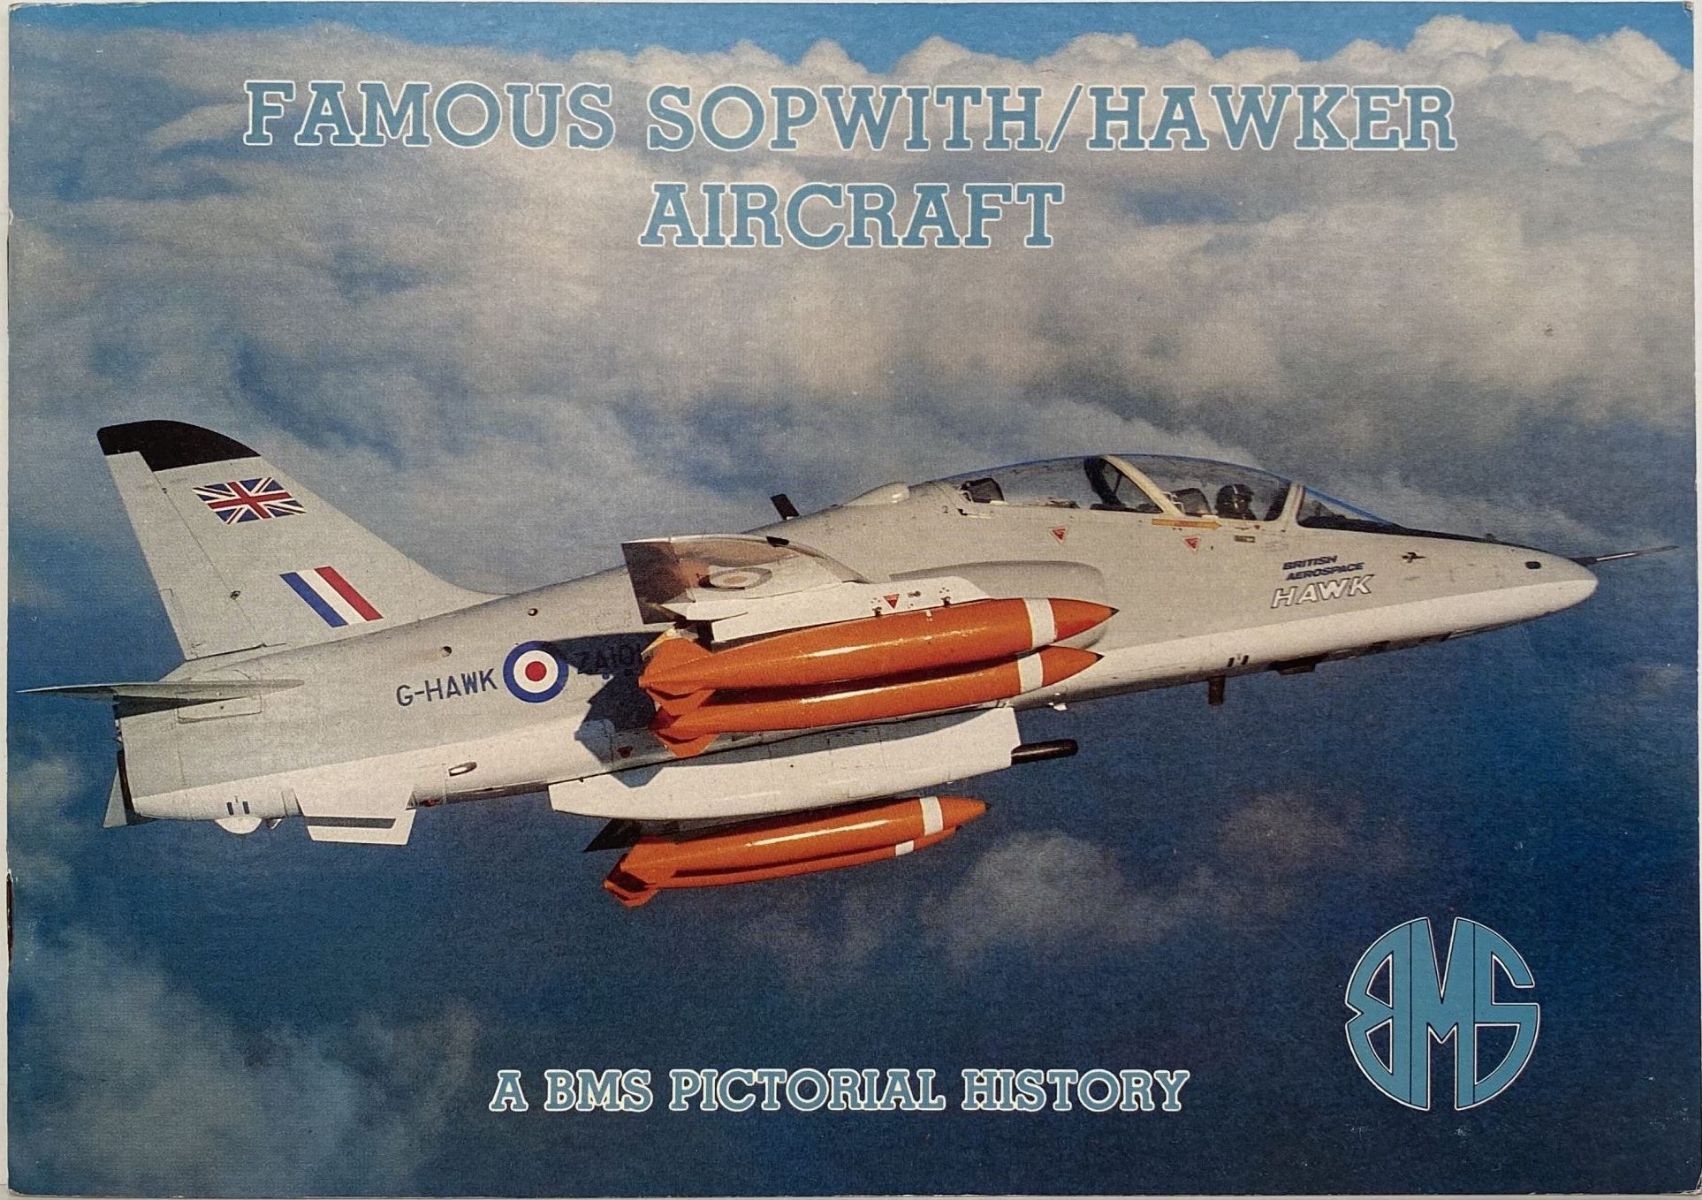 FAMOUS SOPWITH / HAWKER AIRCRAFT